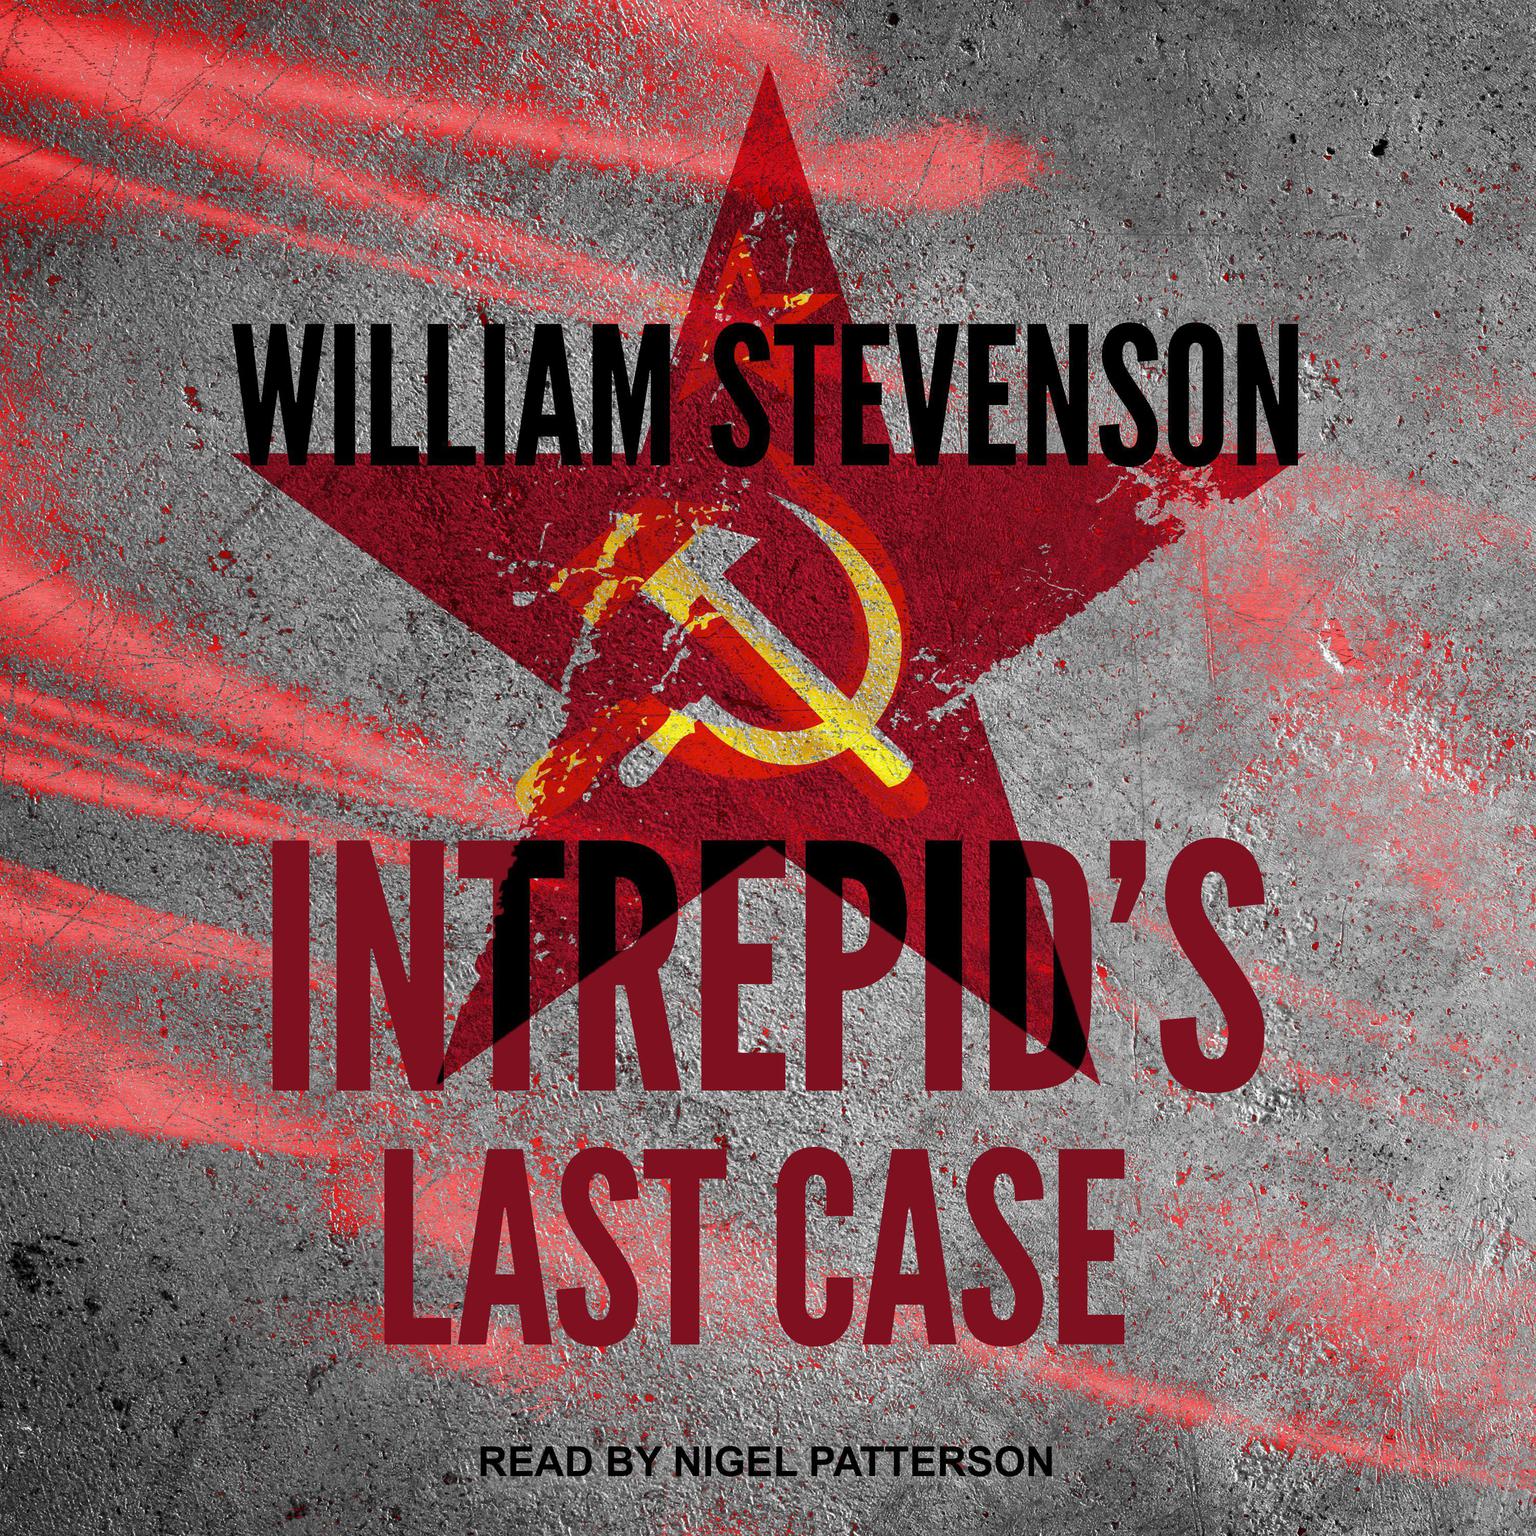 Intrepid’s Last Case Audiobook, by William Stevenson